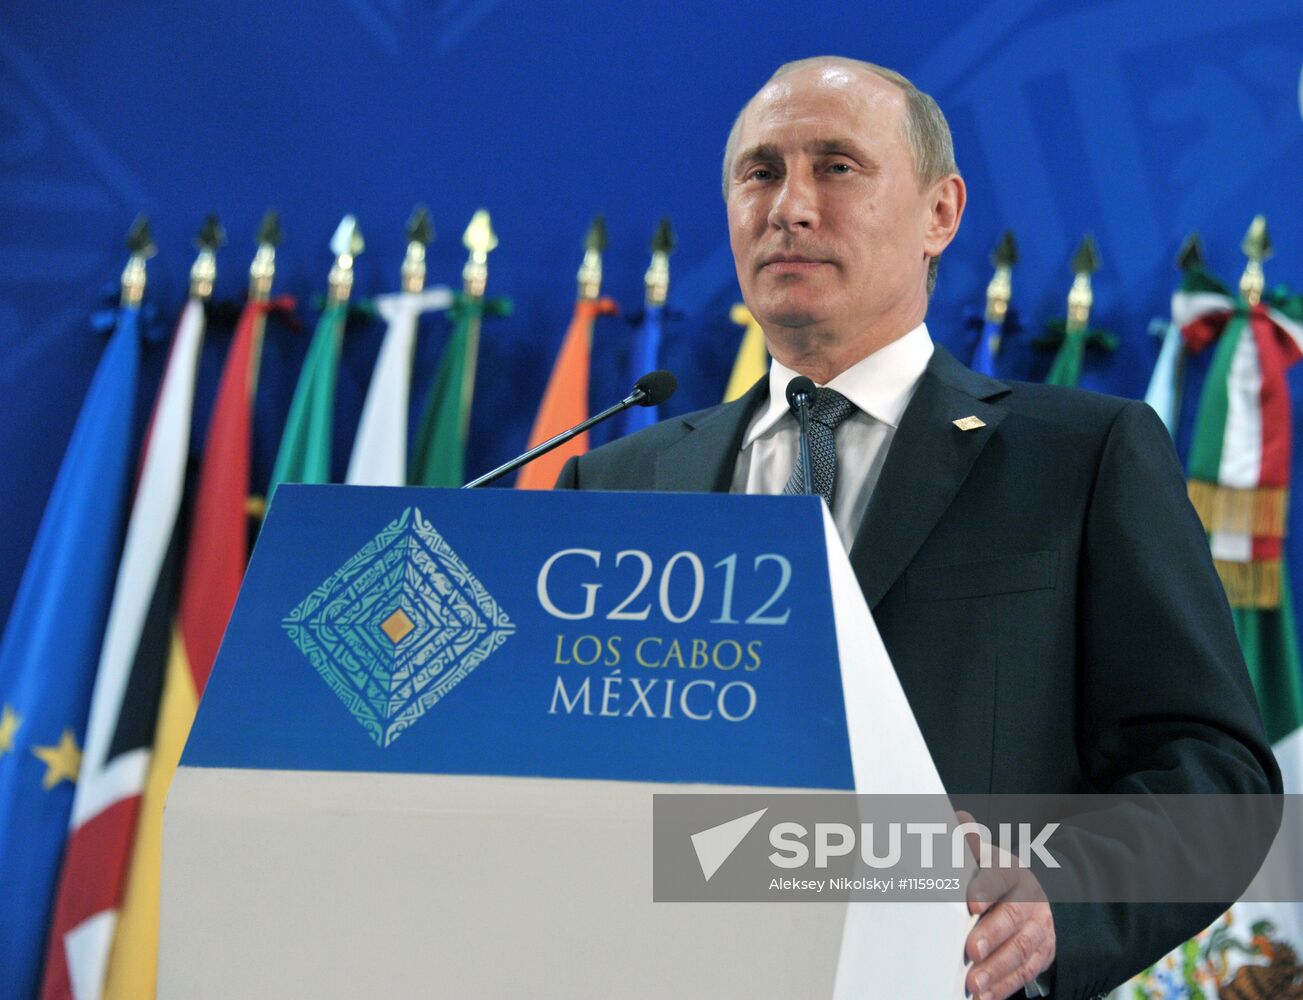 Vladimir Putin at G20 summit in Los Cabos, Mexico